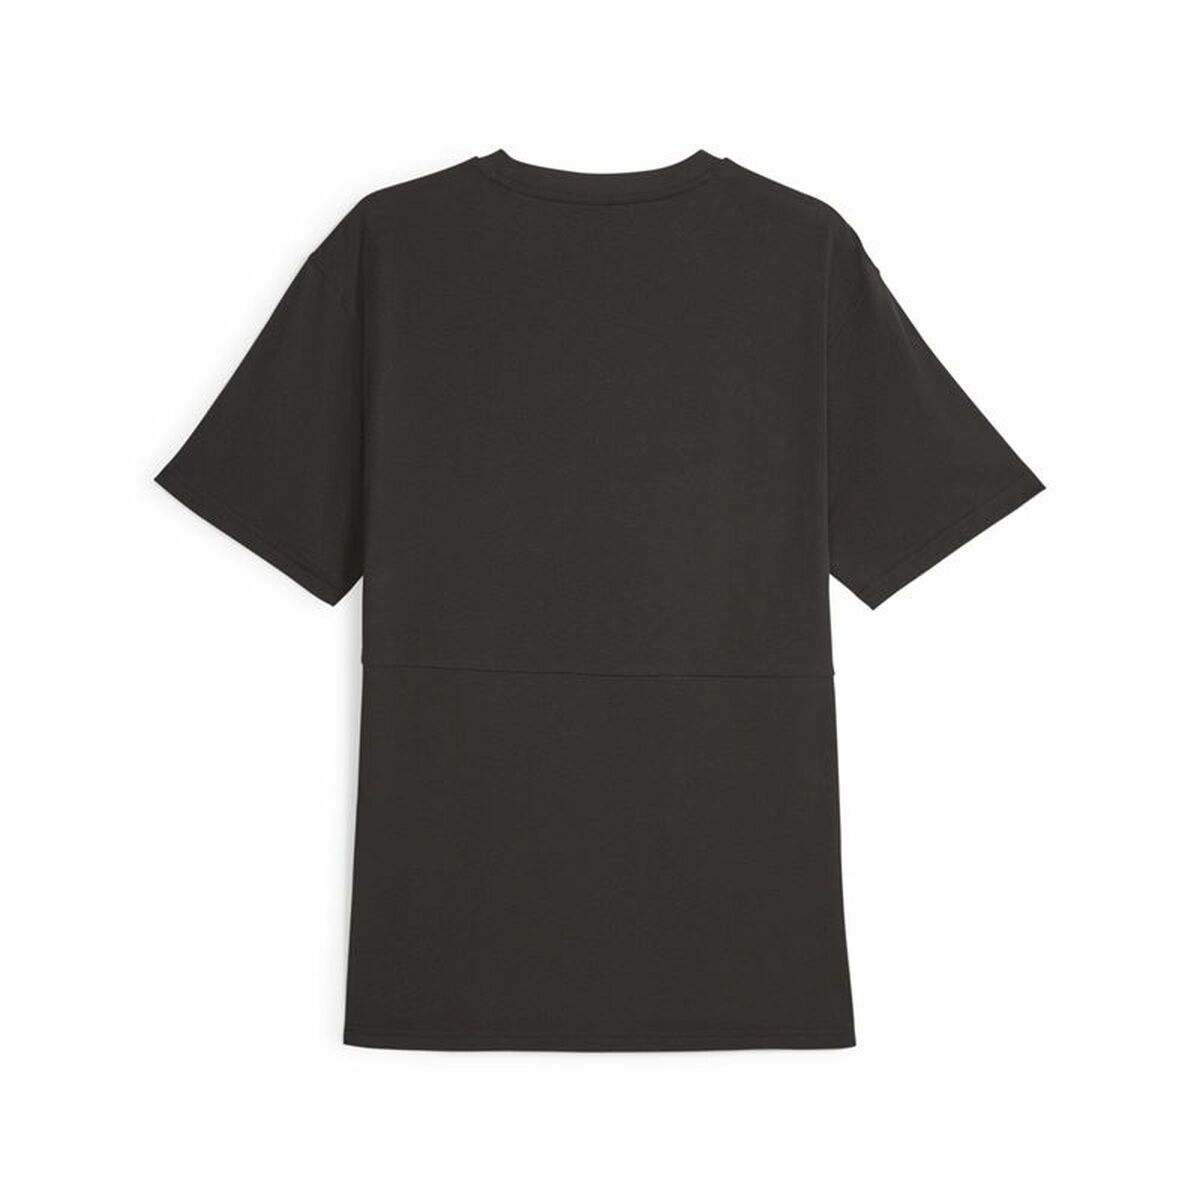 Men’s Short Sleeve T-Shirt Puma Power Colorblock Black